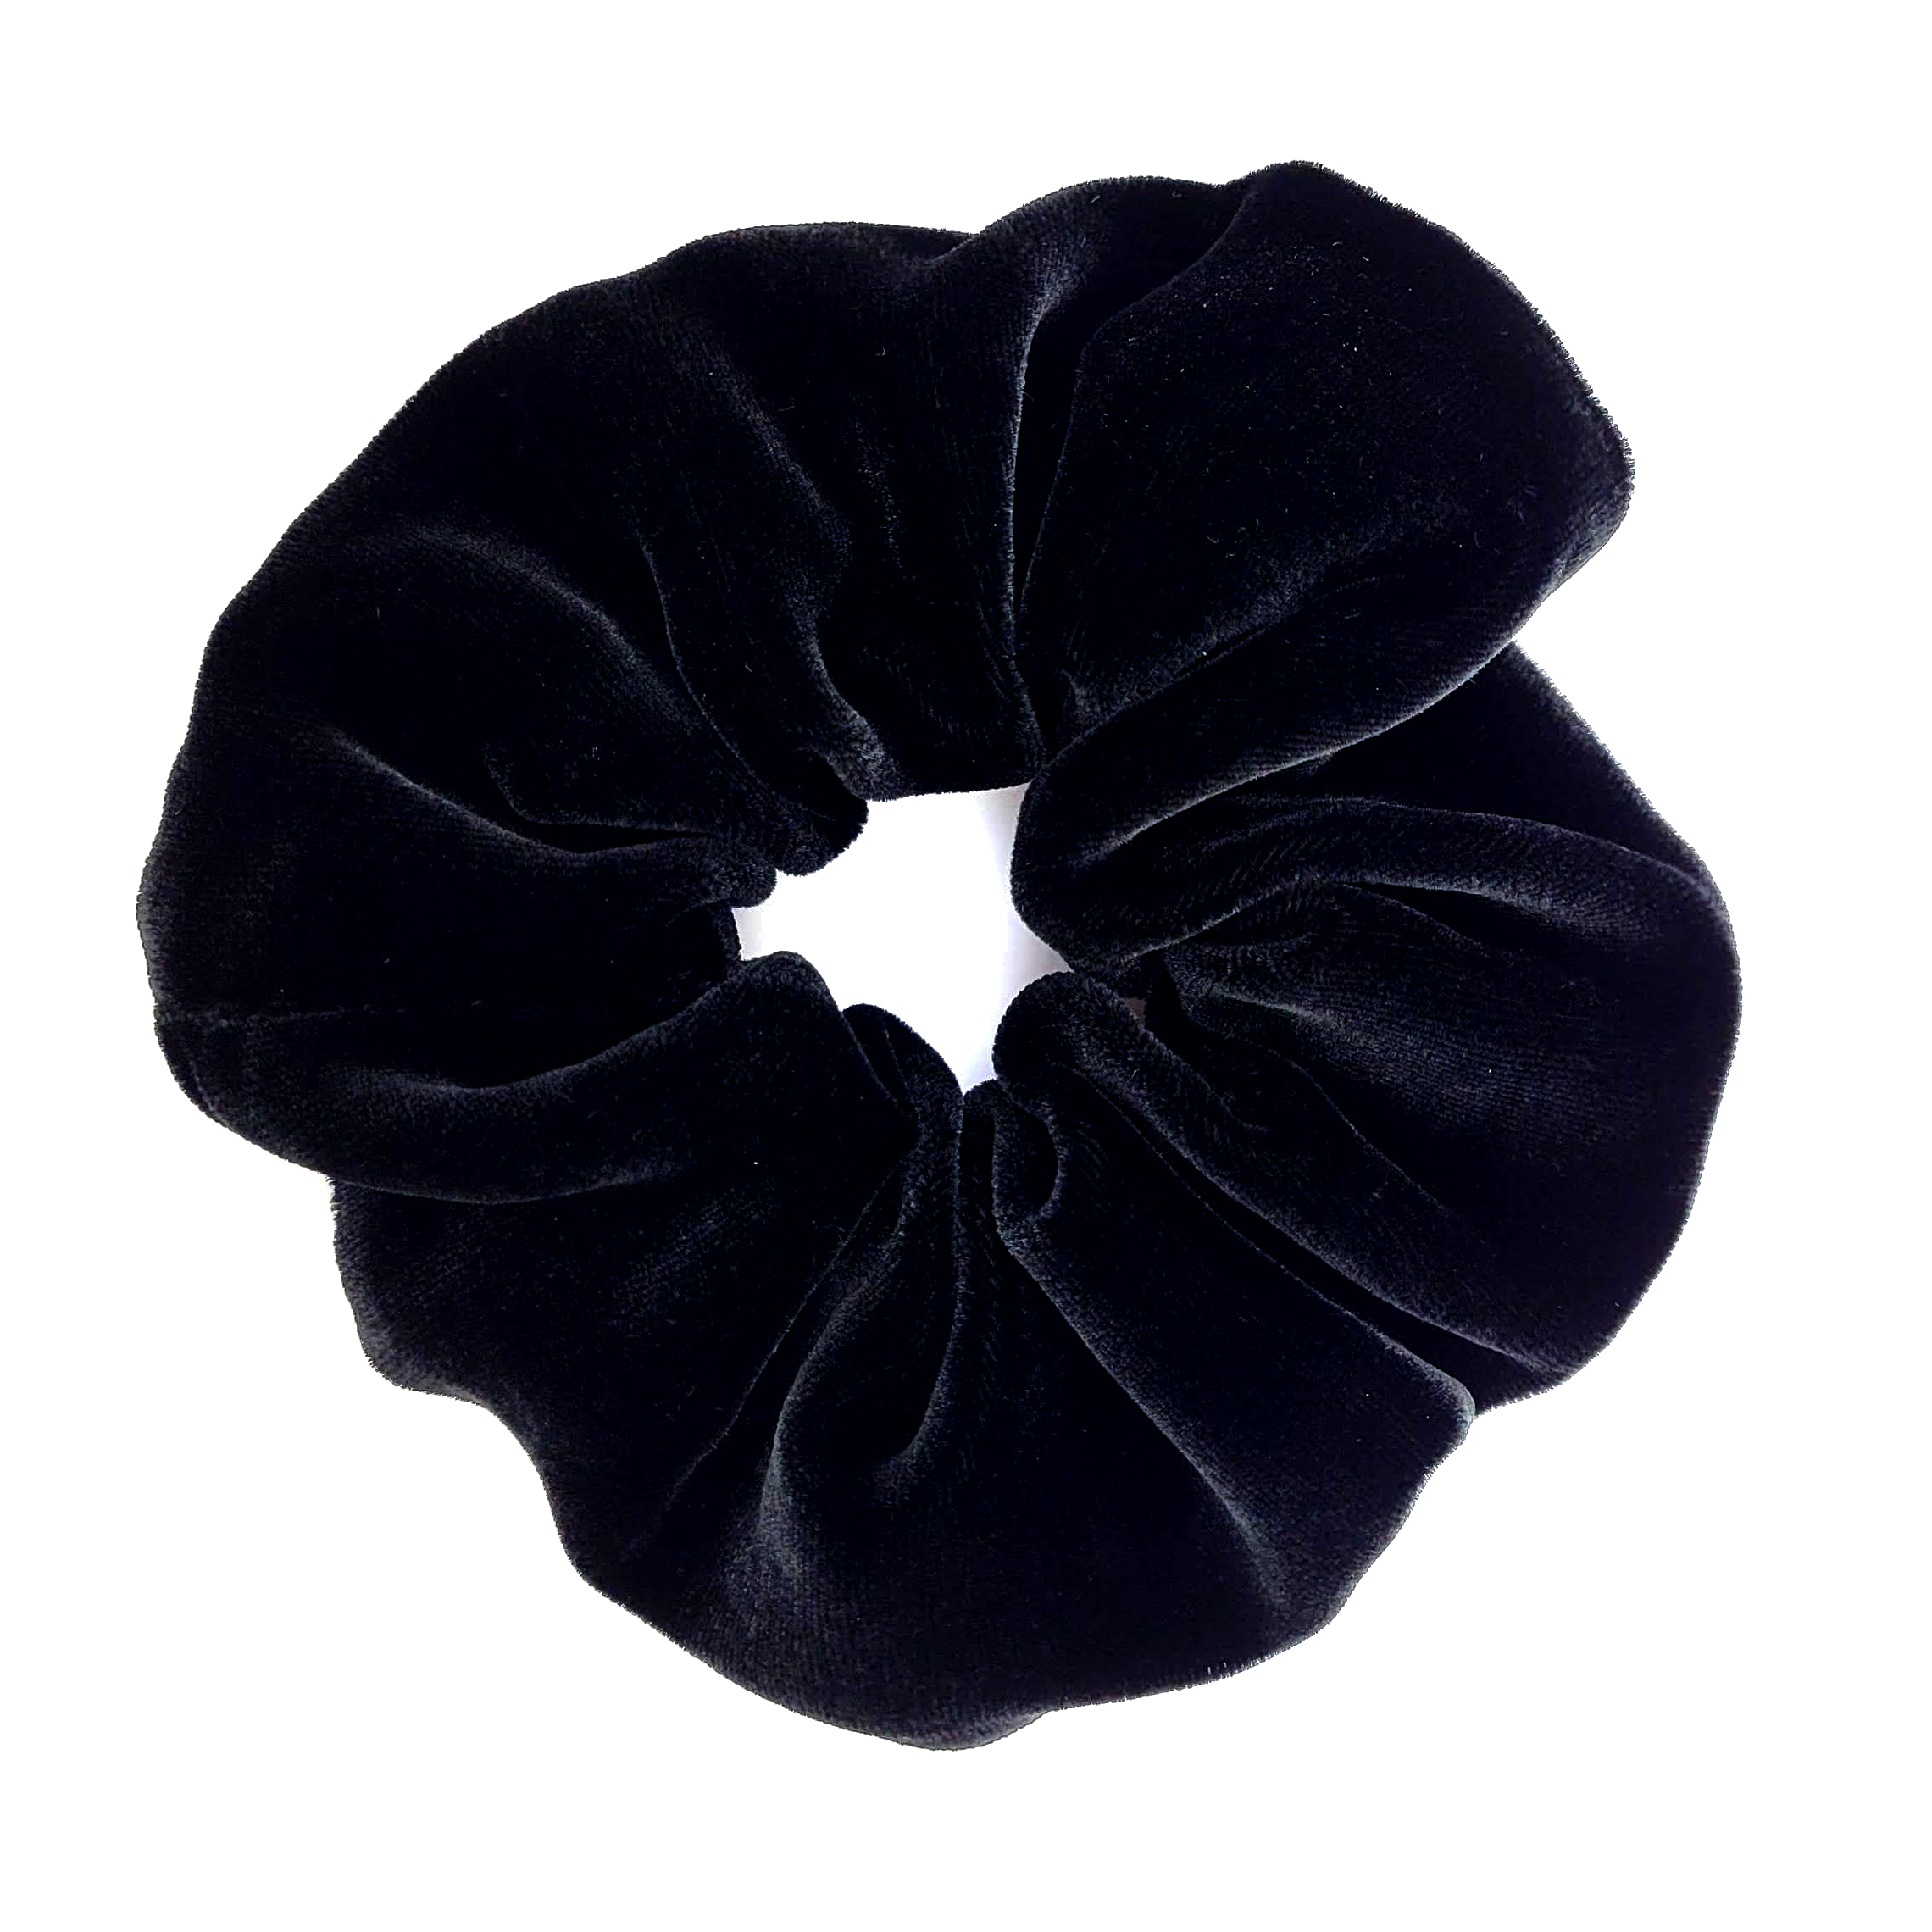 Black silk velvet scrunchy hair accessory handmade in Canada by Lynne Kiel